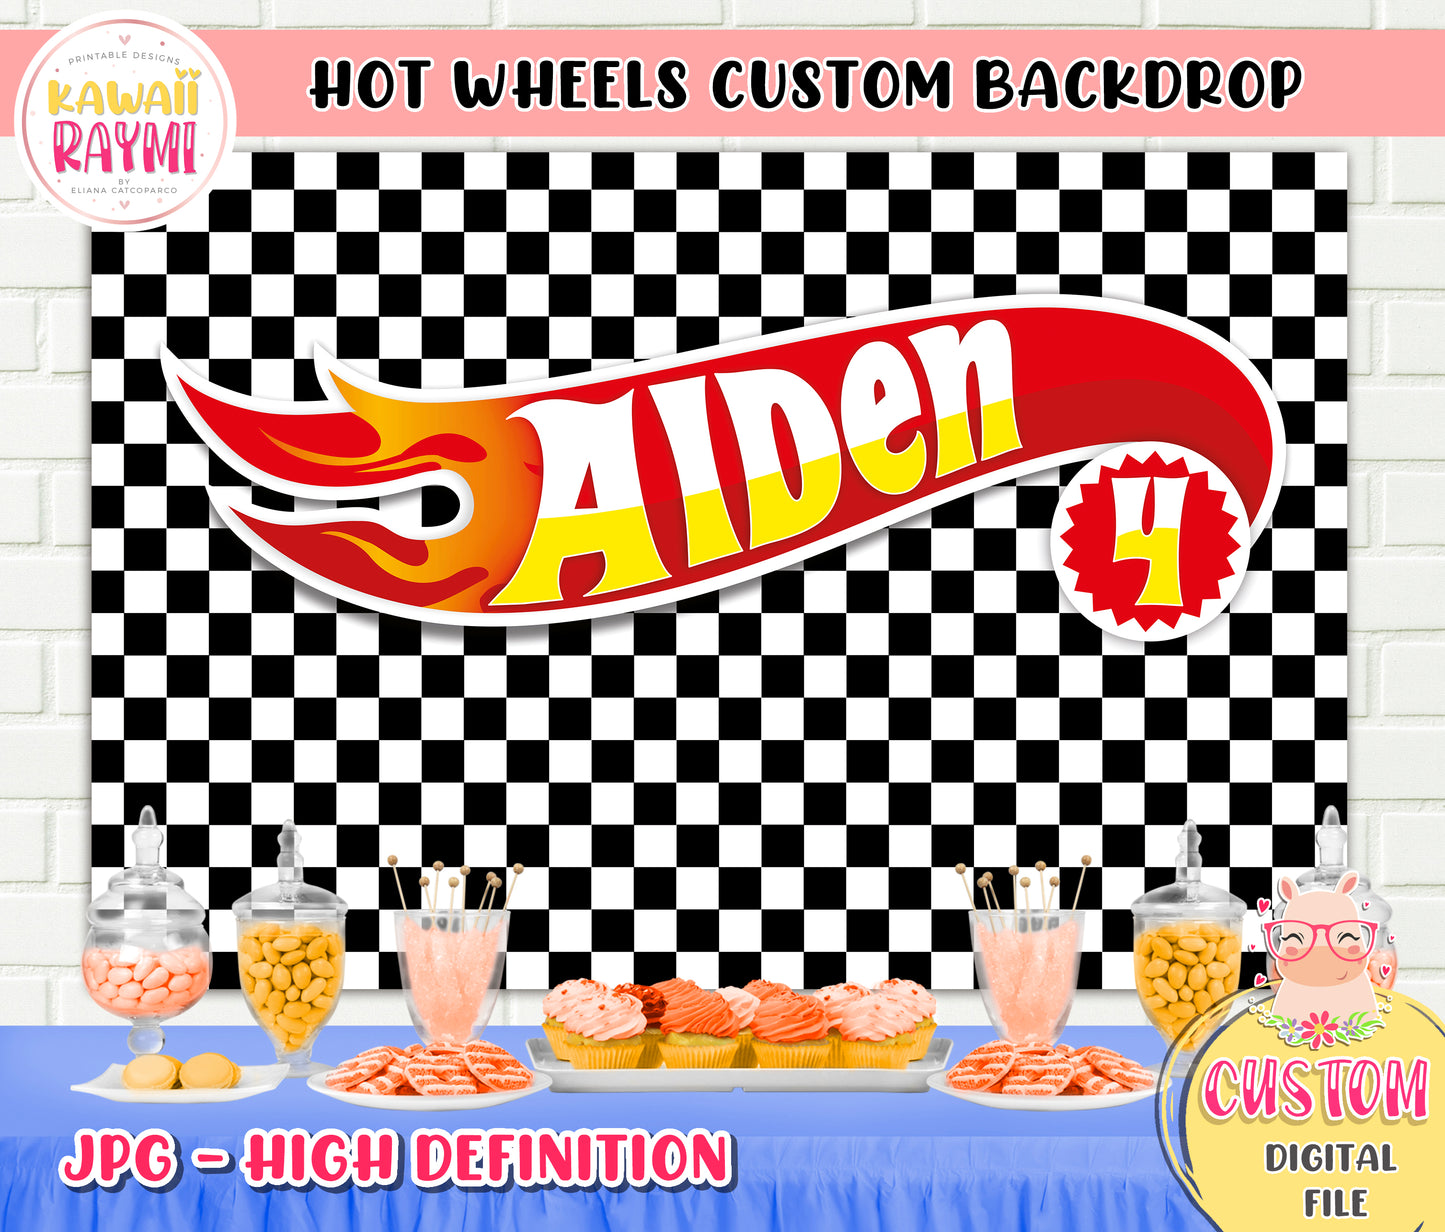 Hot wheels custom backdrop, hot wheels banner printable, backdrop digital, birthday party